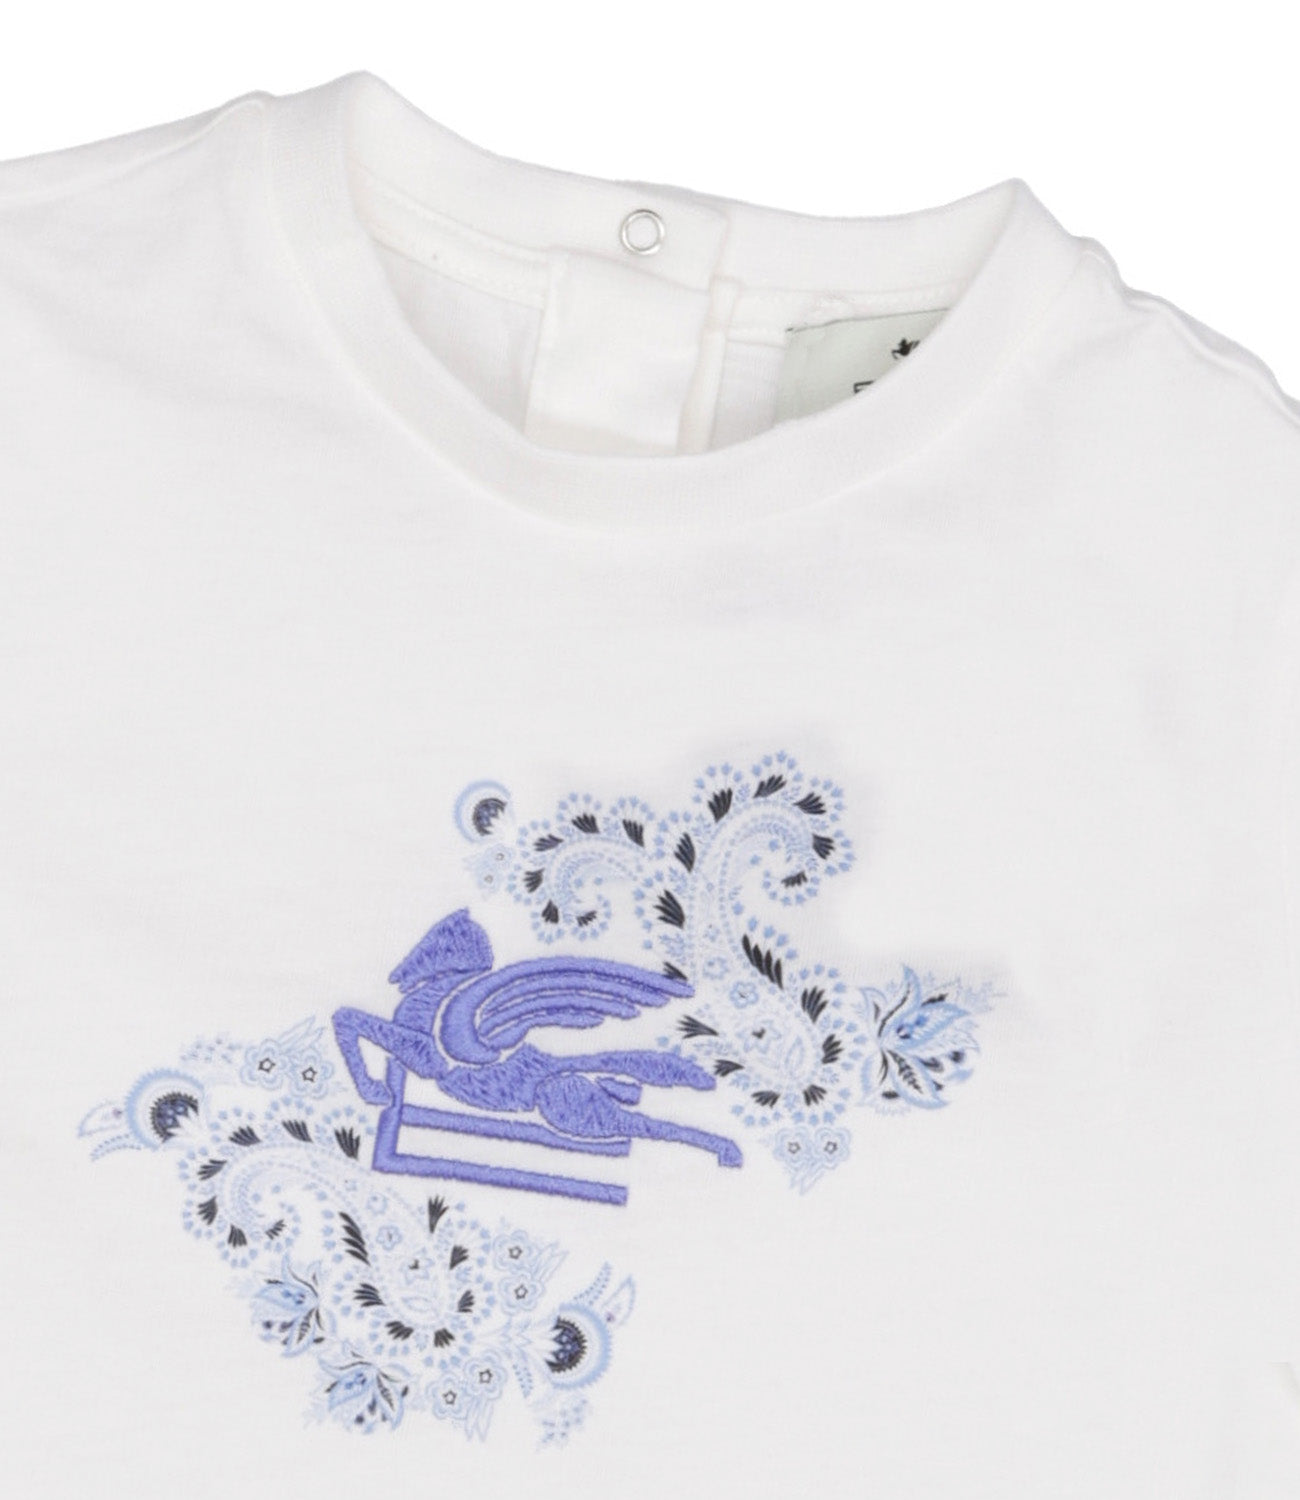 Etro Kids | Ivory and Light Blue T-Shirt